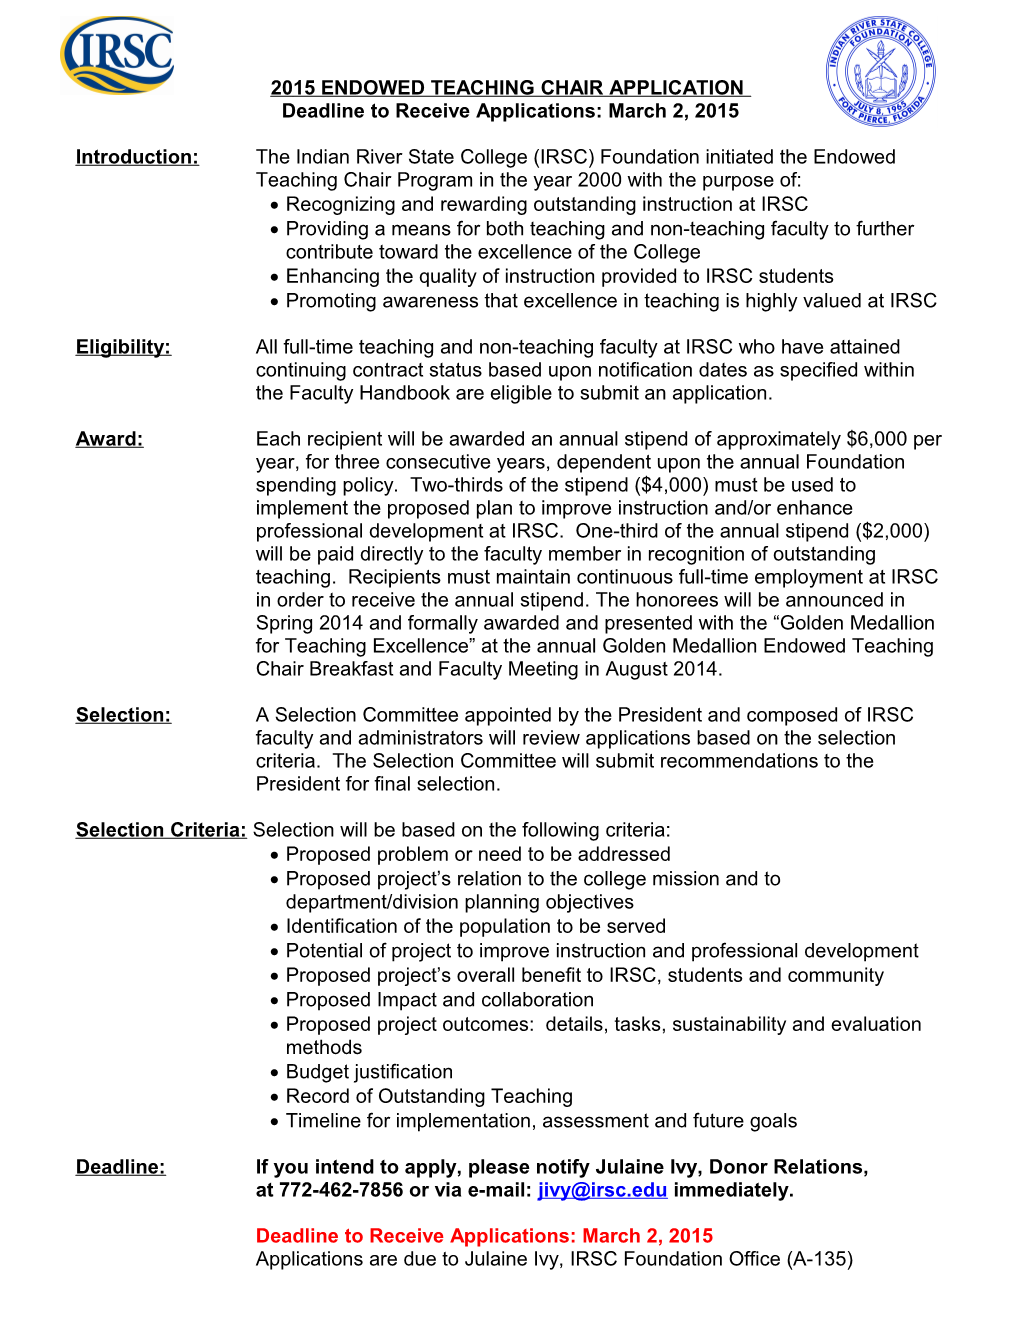 2007 Endowed Teaching Chair Application Form